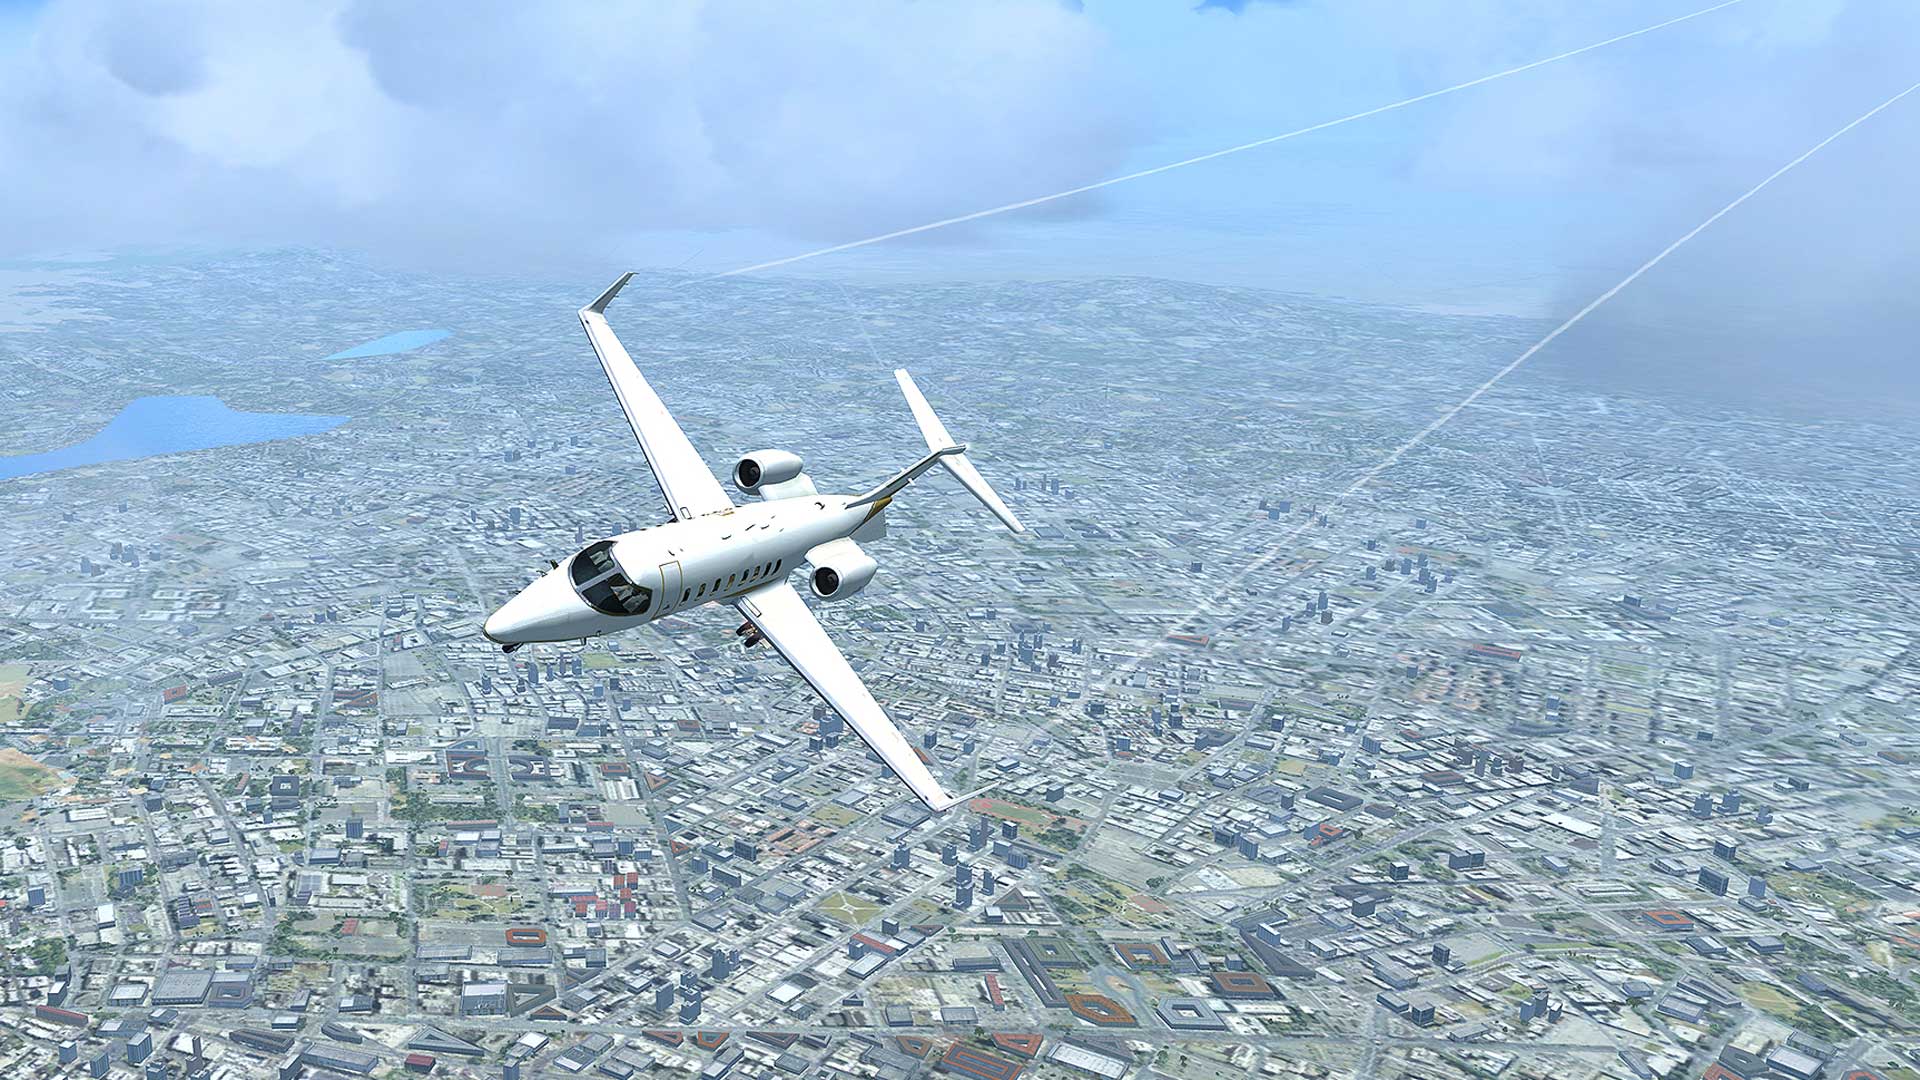 Microsoft's Flight Simulator X immerses players into realistic